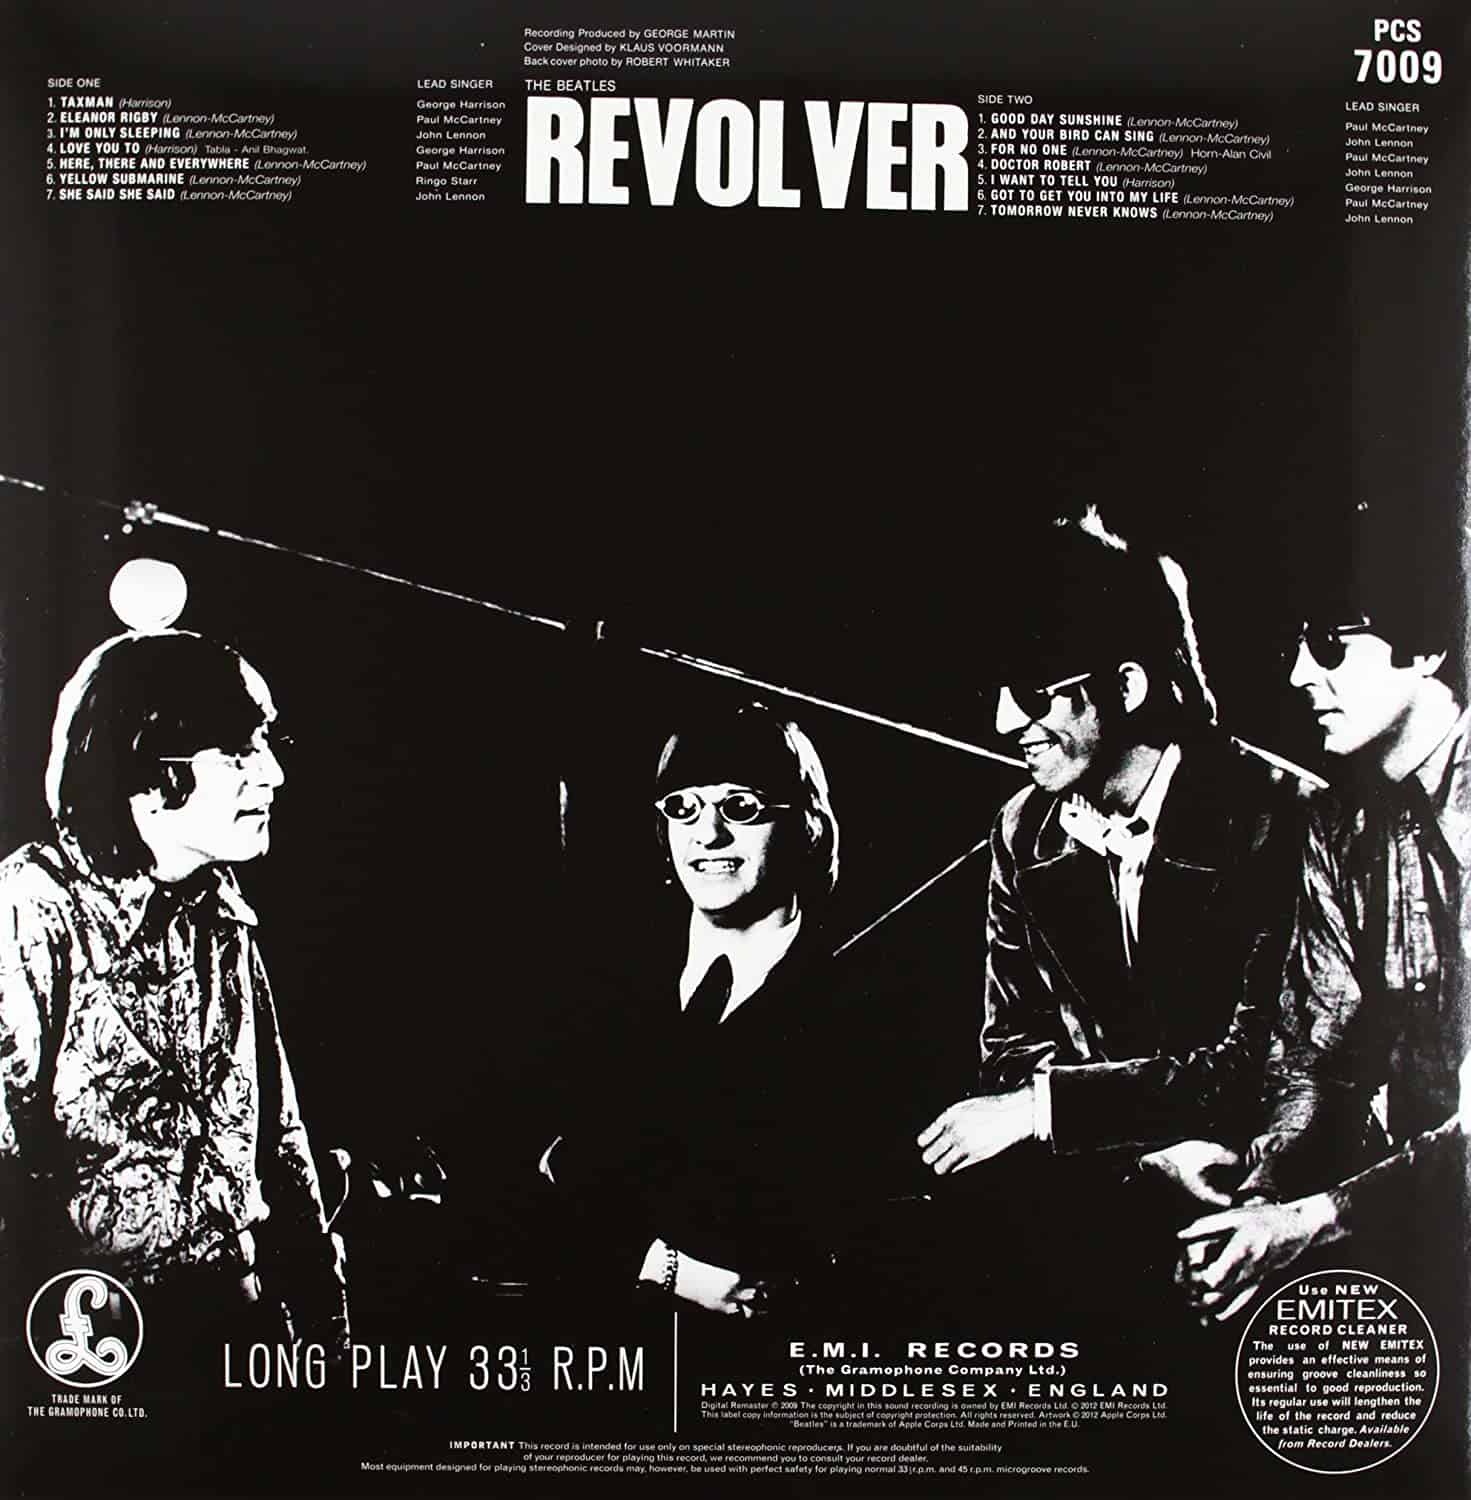 The-Beatles-Revolver-LP-Reord-Album-back